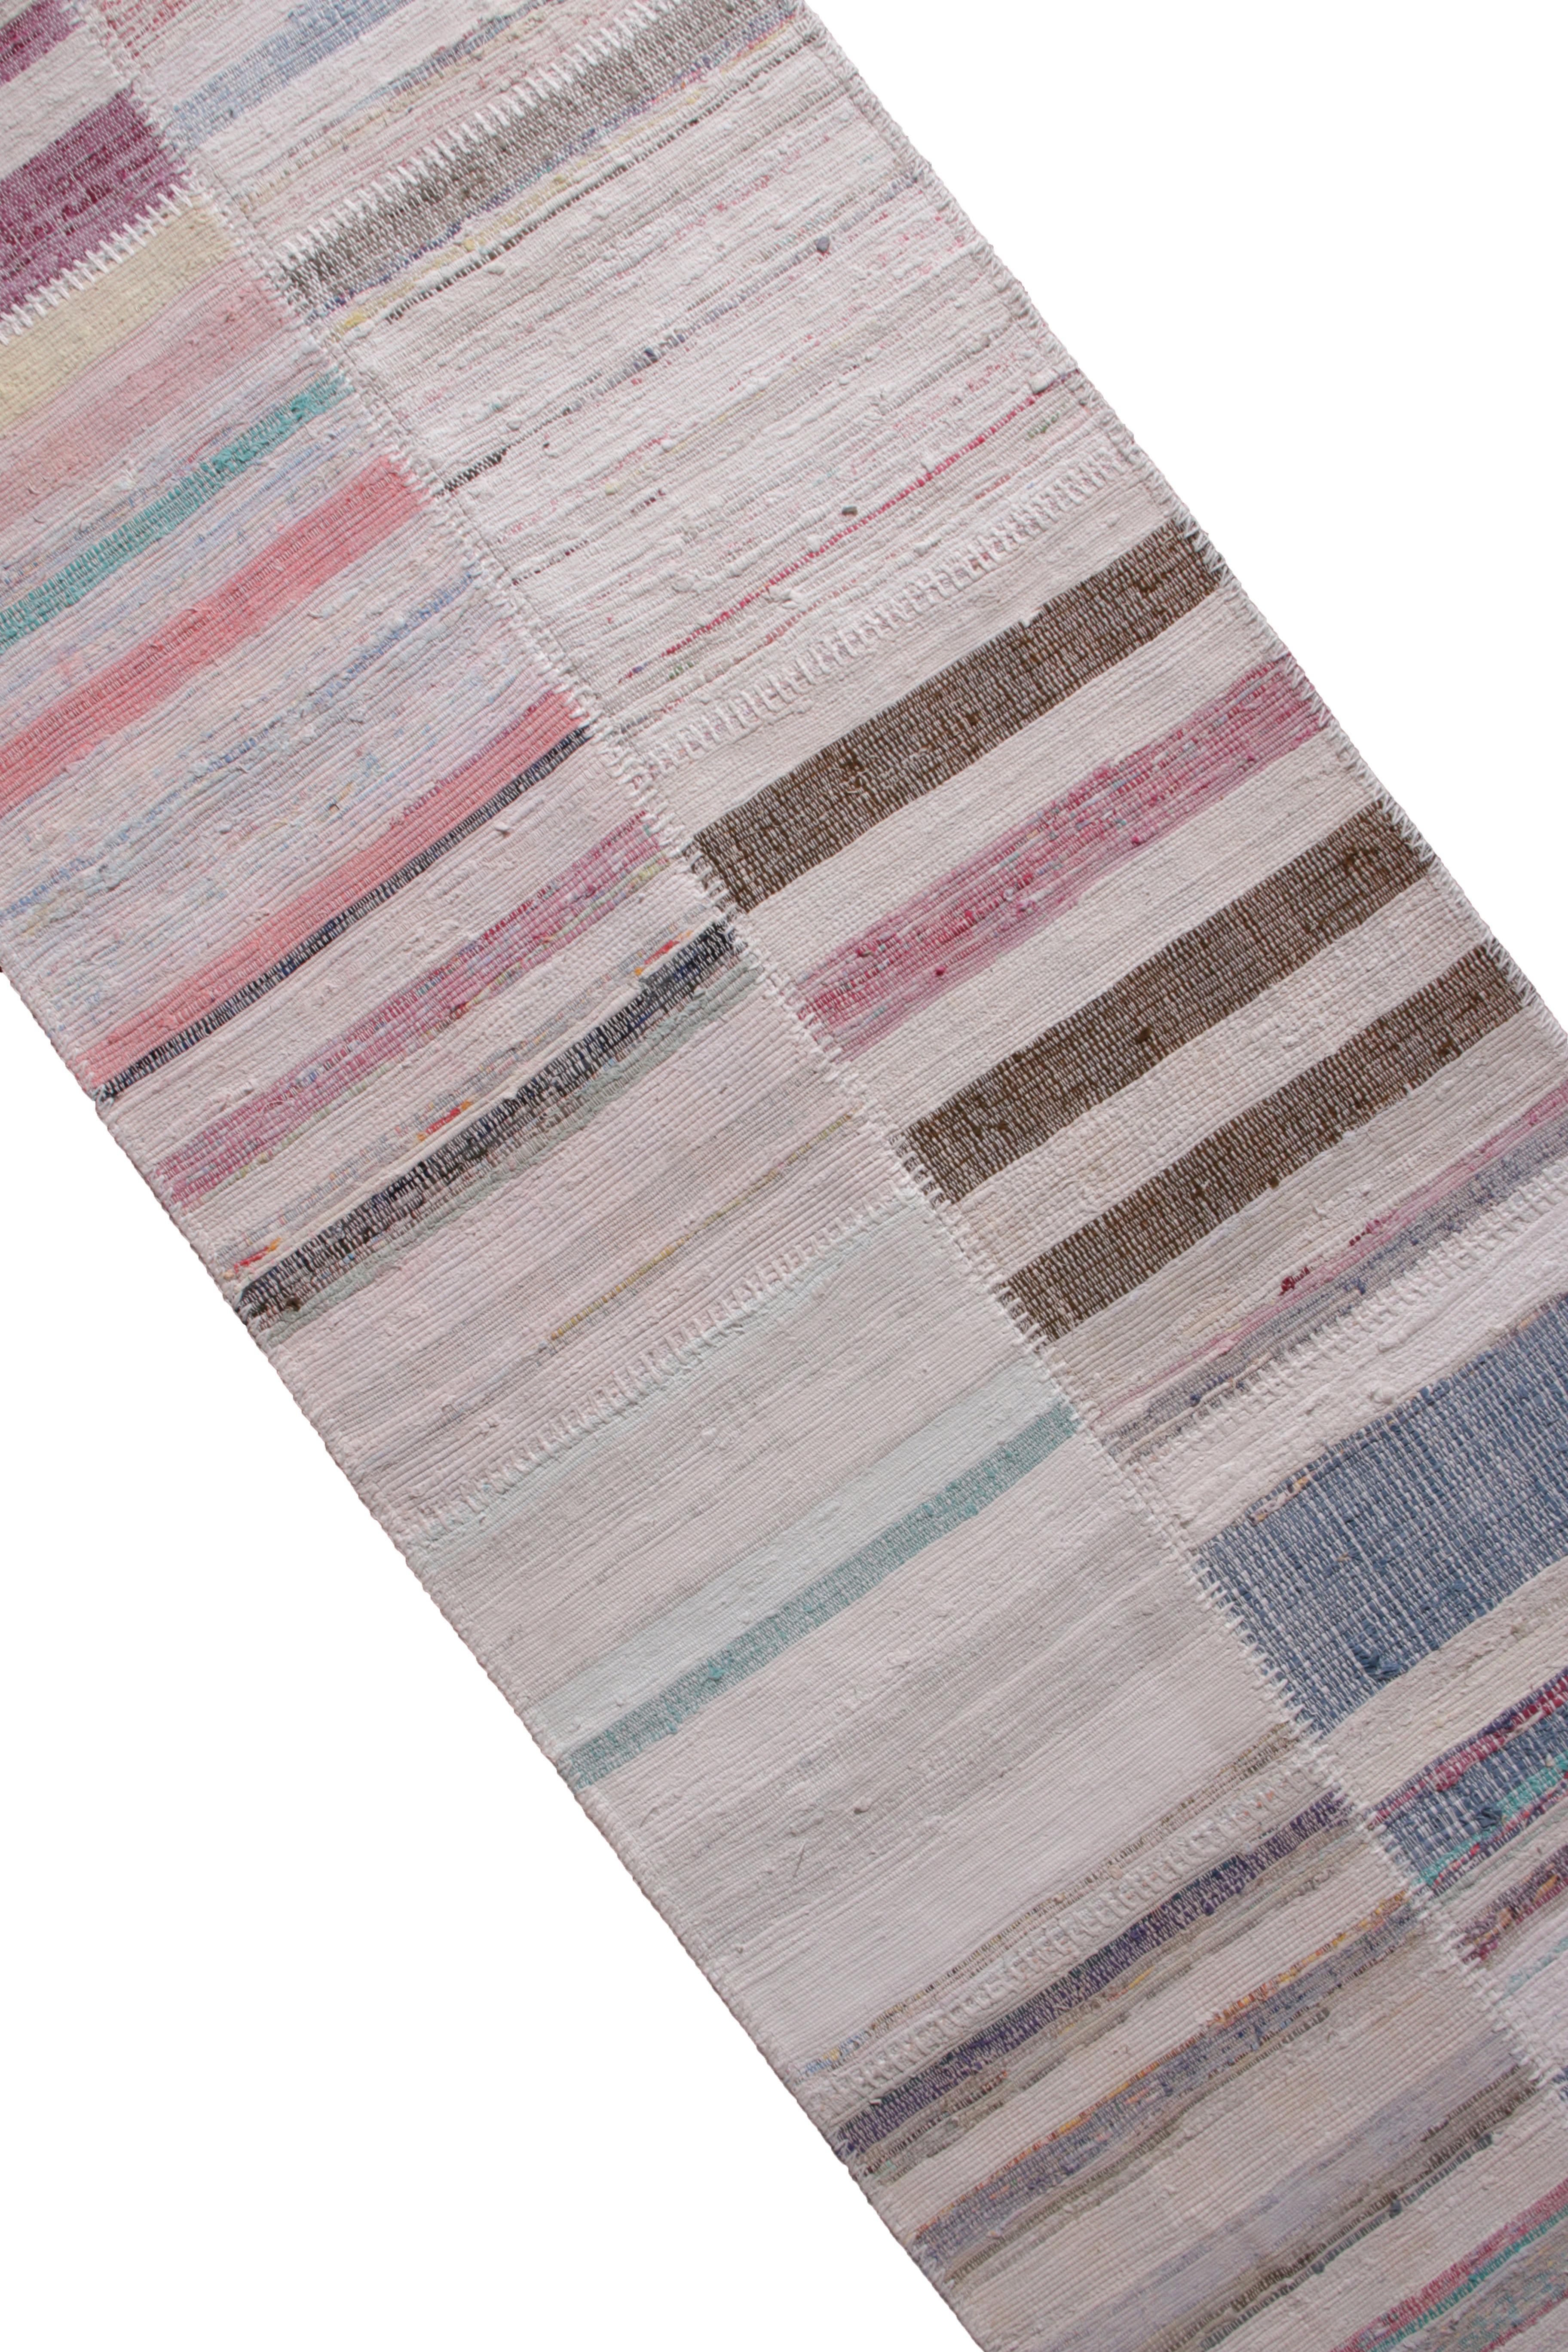 Turkish Rug & Kilim's Modern Patchwork Kilim Runner in Gray Multi-Color Stripe Pattern